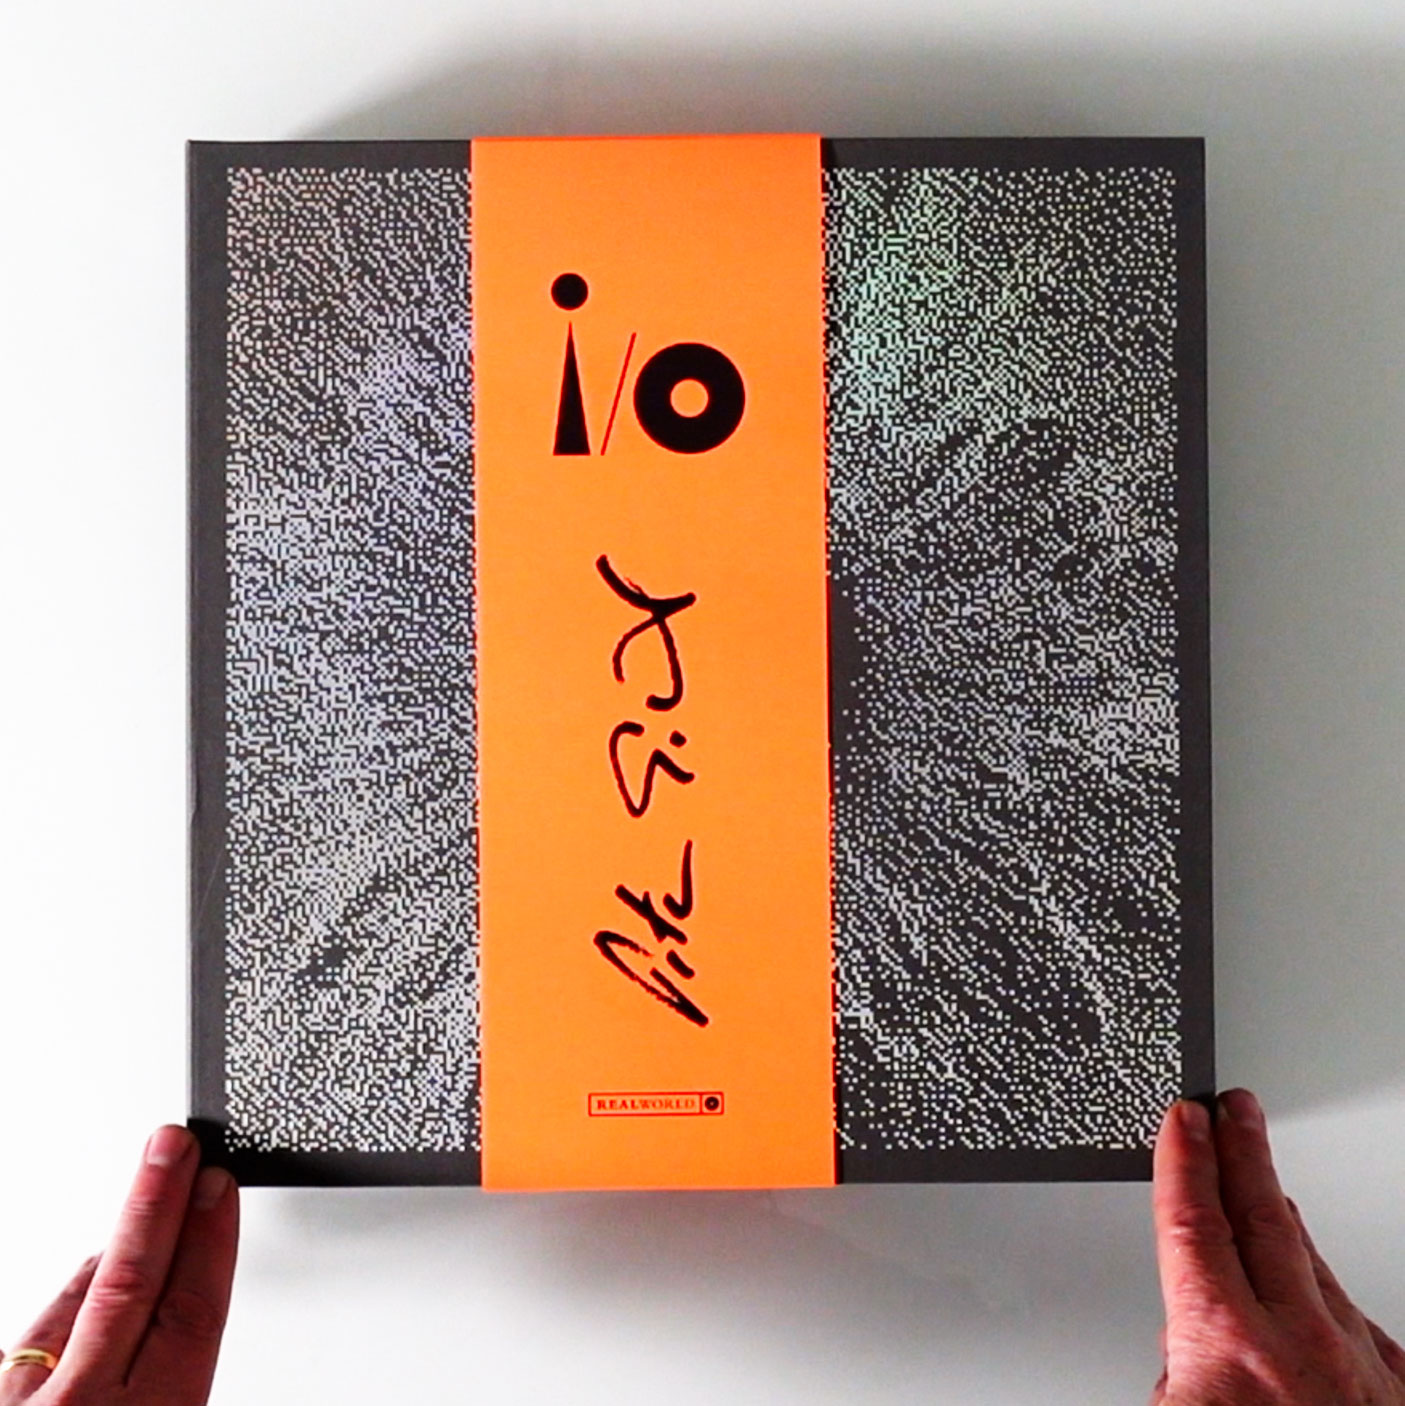 Peter Gabriel / i/o box set unboxing video